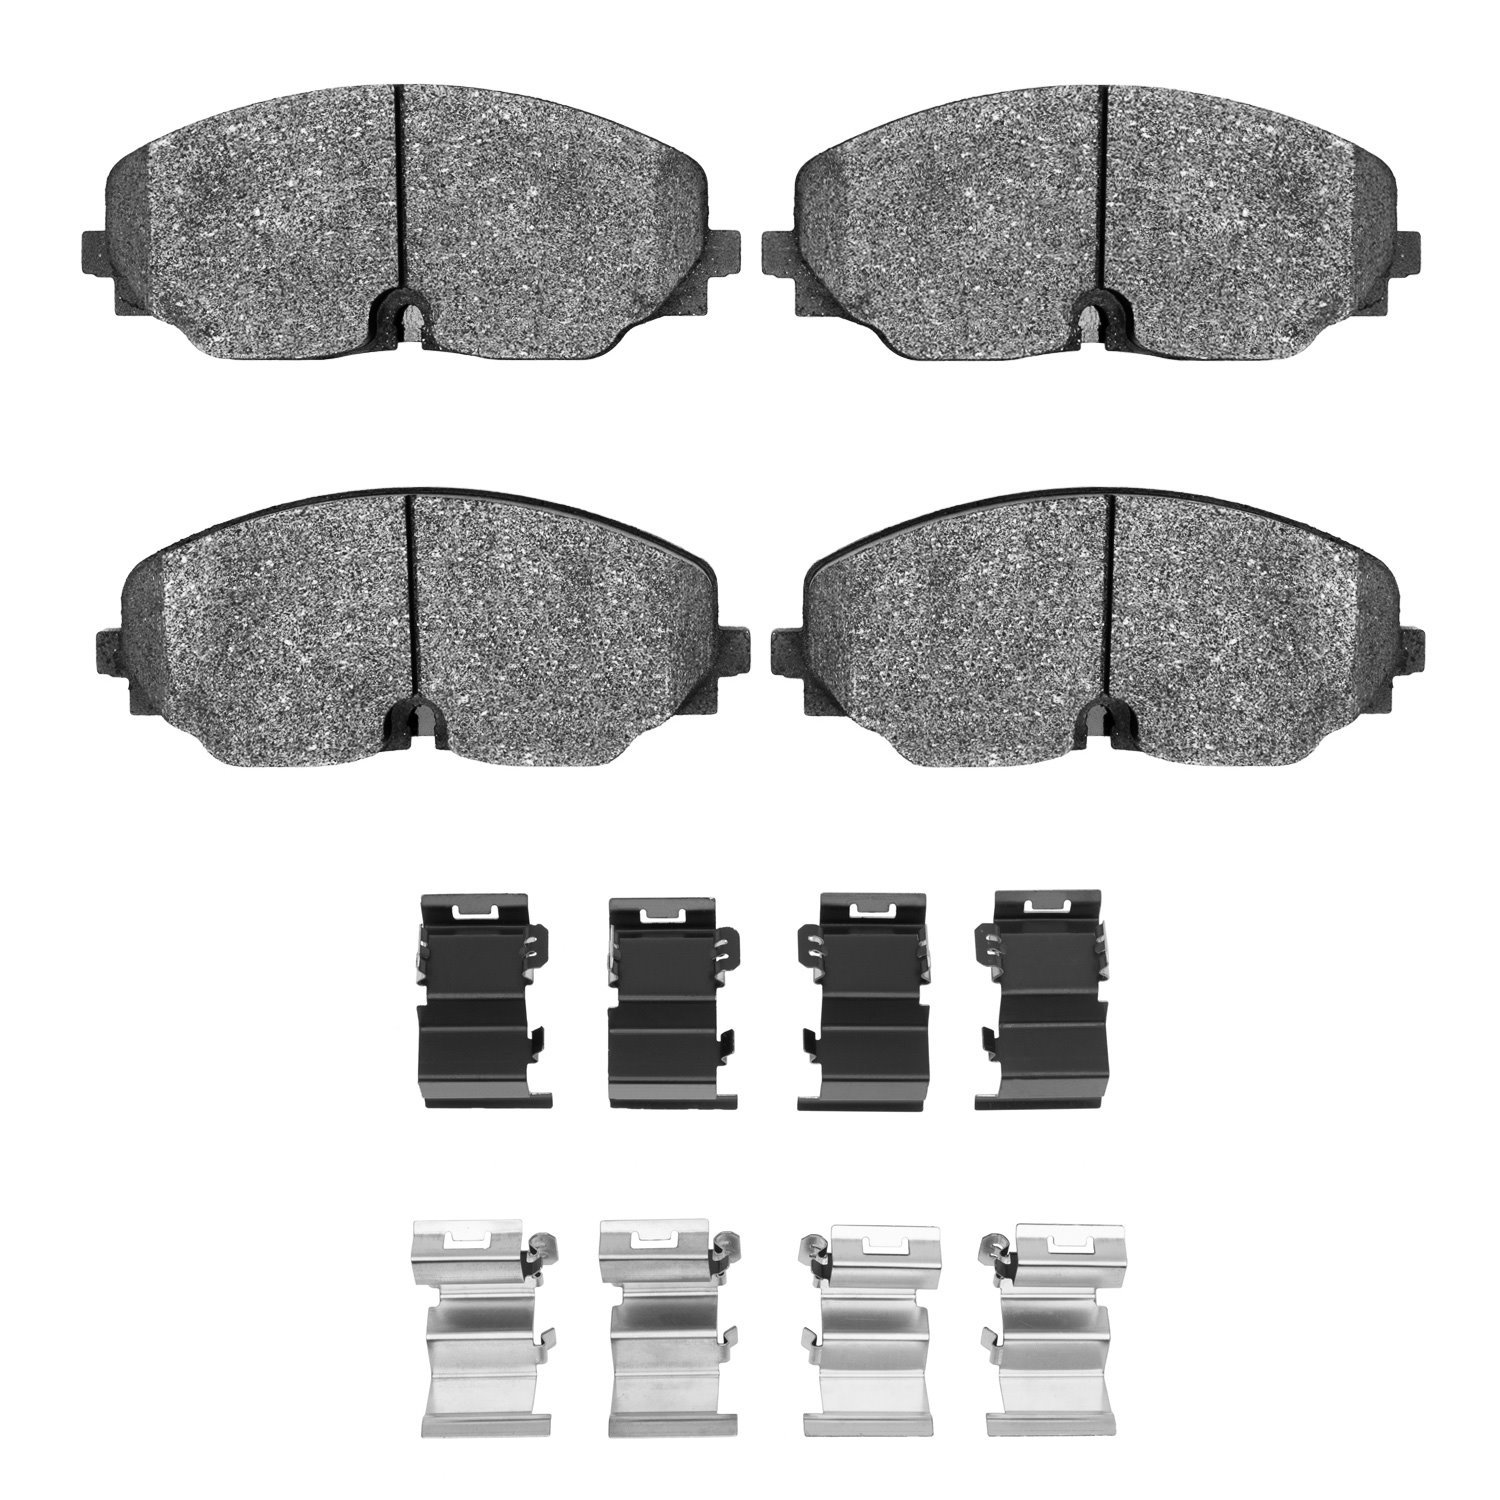 1600-2074-01 5000 Euro Ceramic Brake Pads & Hardware Kit, Fits Select Audi/Volkswagen, Position: Front